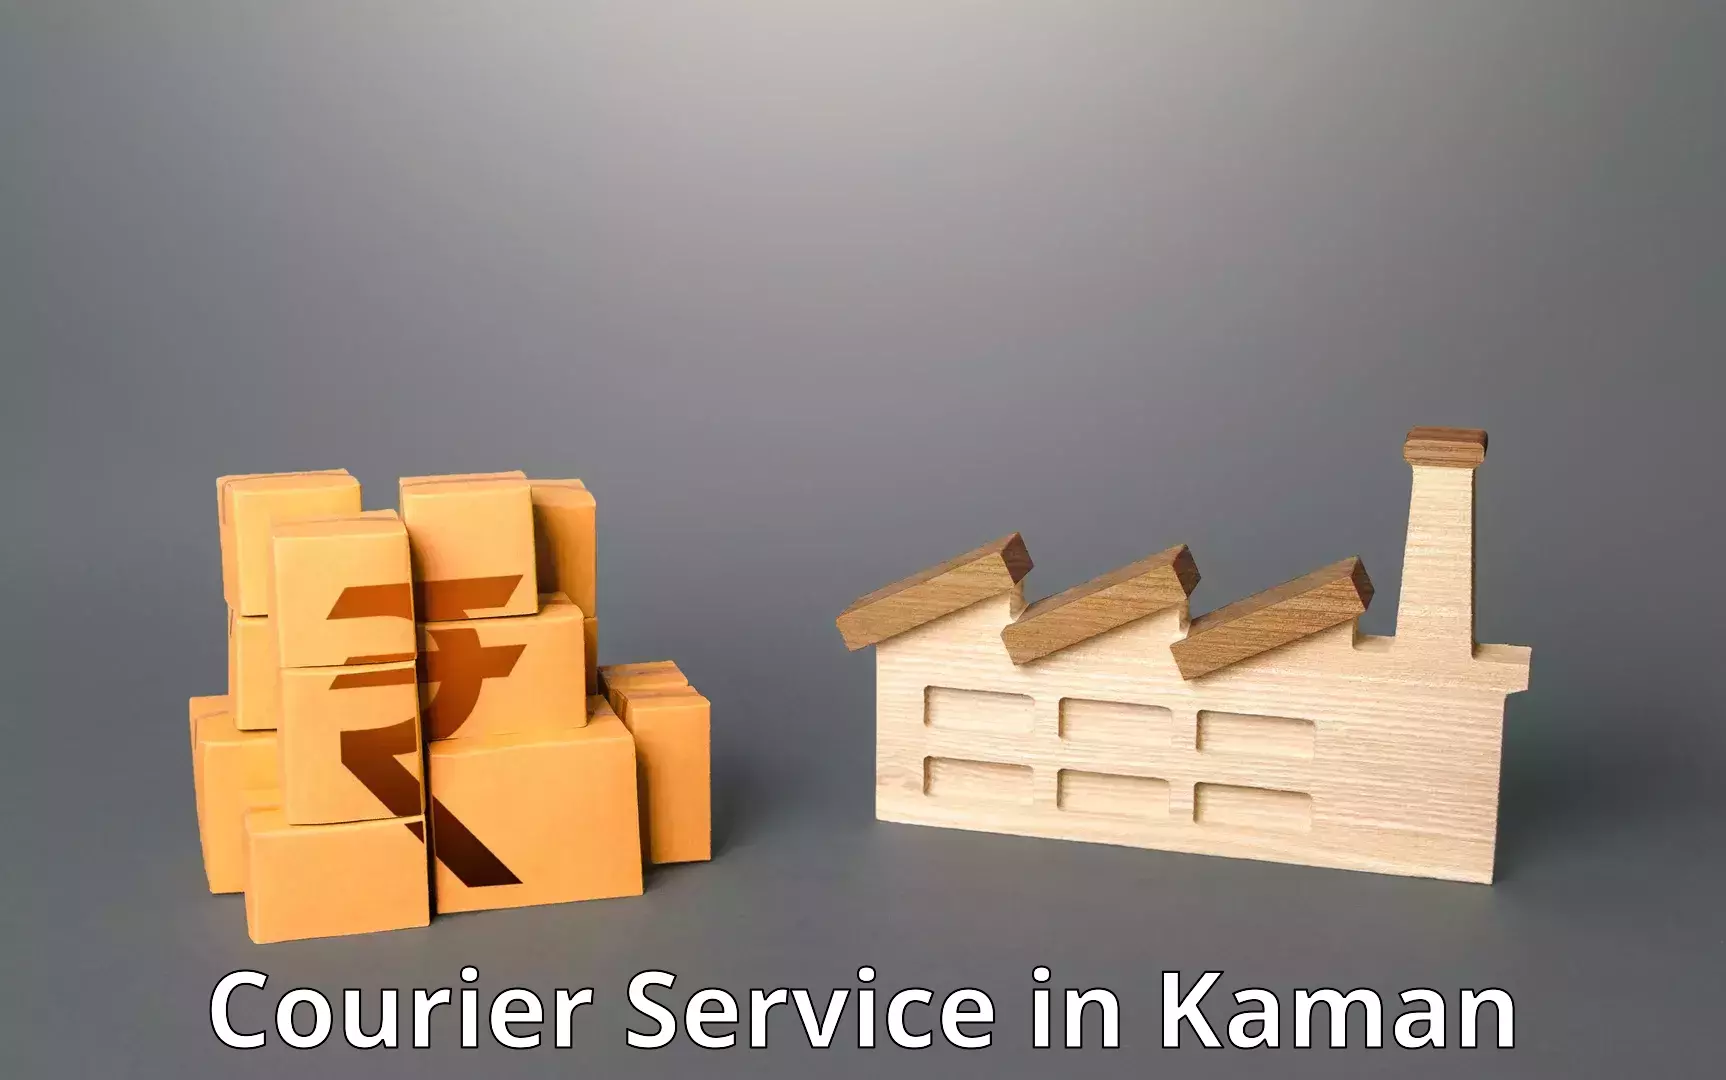 Supply chain efficiency in Kaman